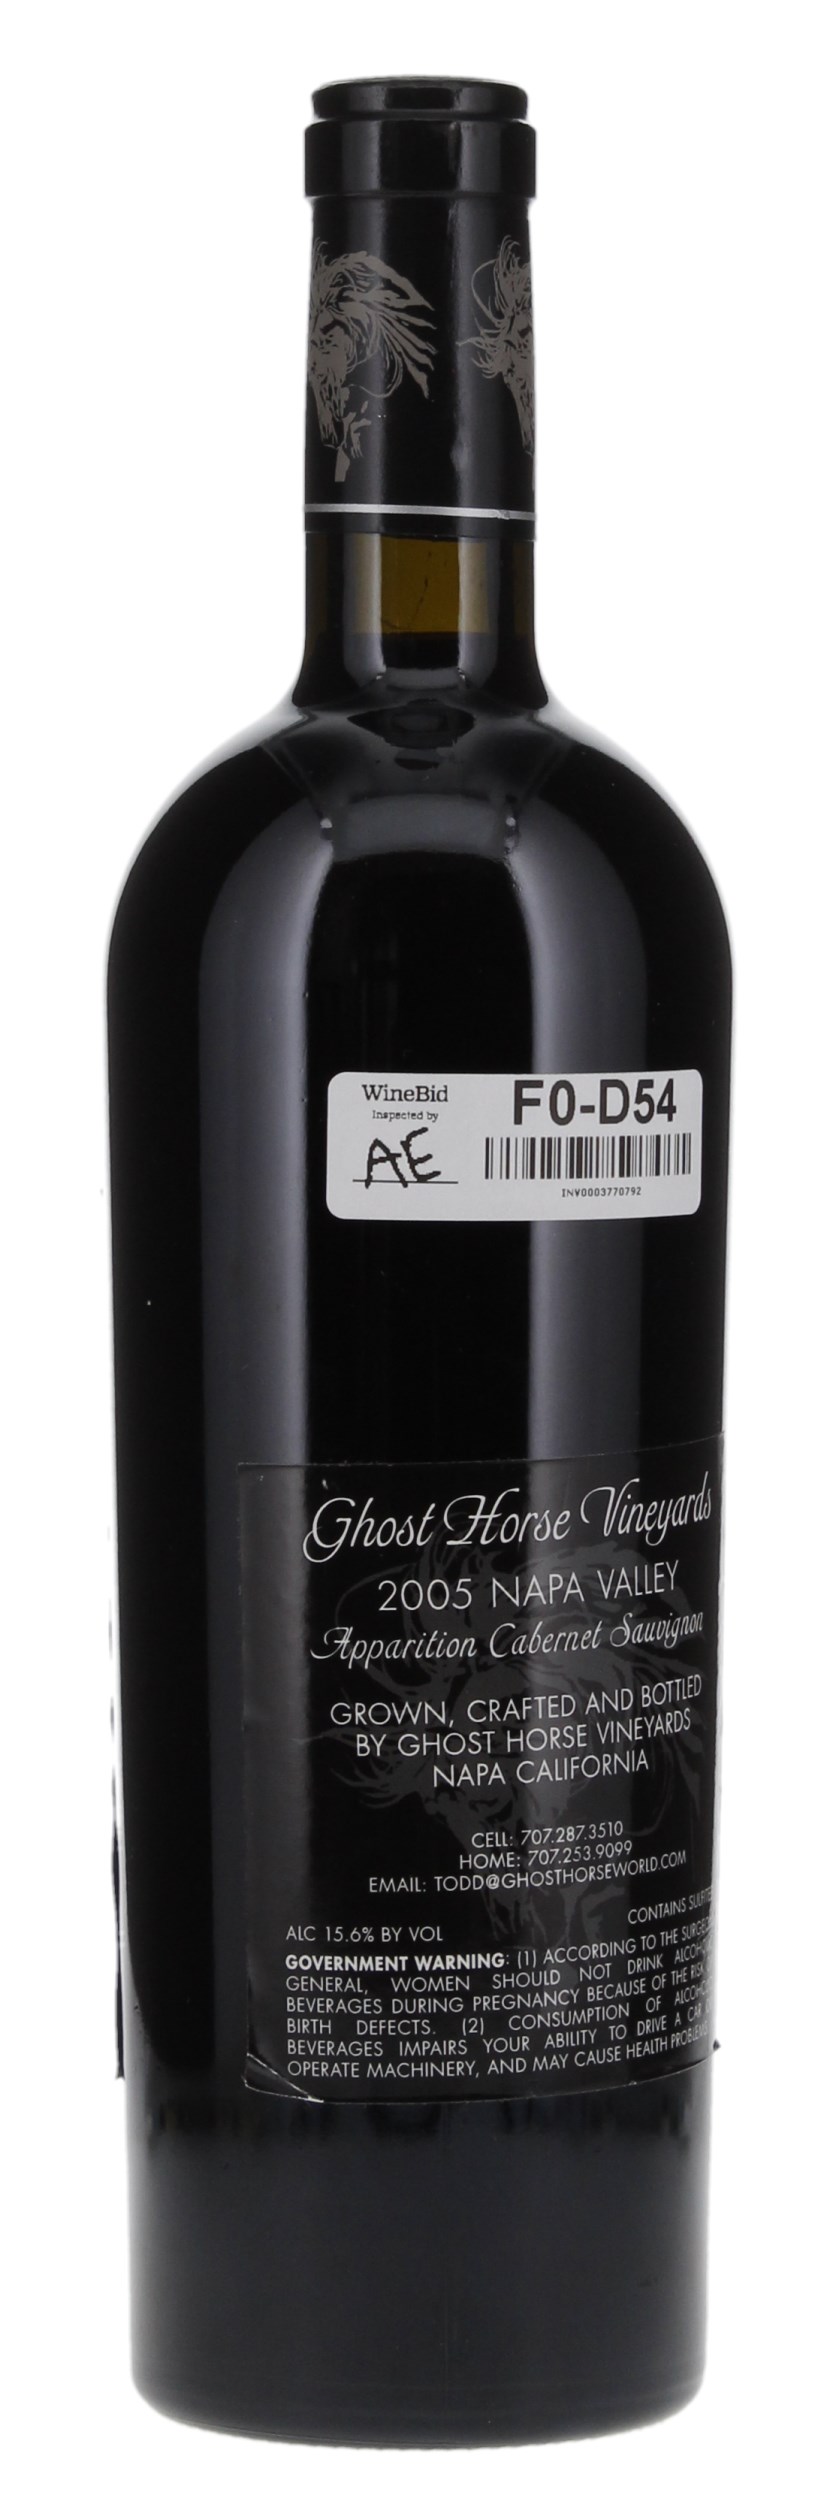 2005 Ghost Horse Vineyard Apparition Cabernet Sauvignon, 750ml